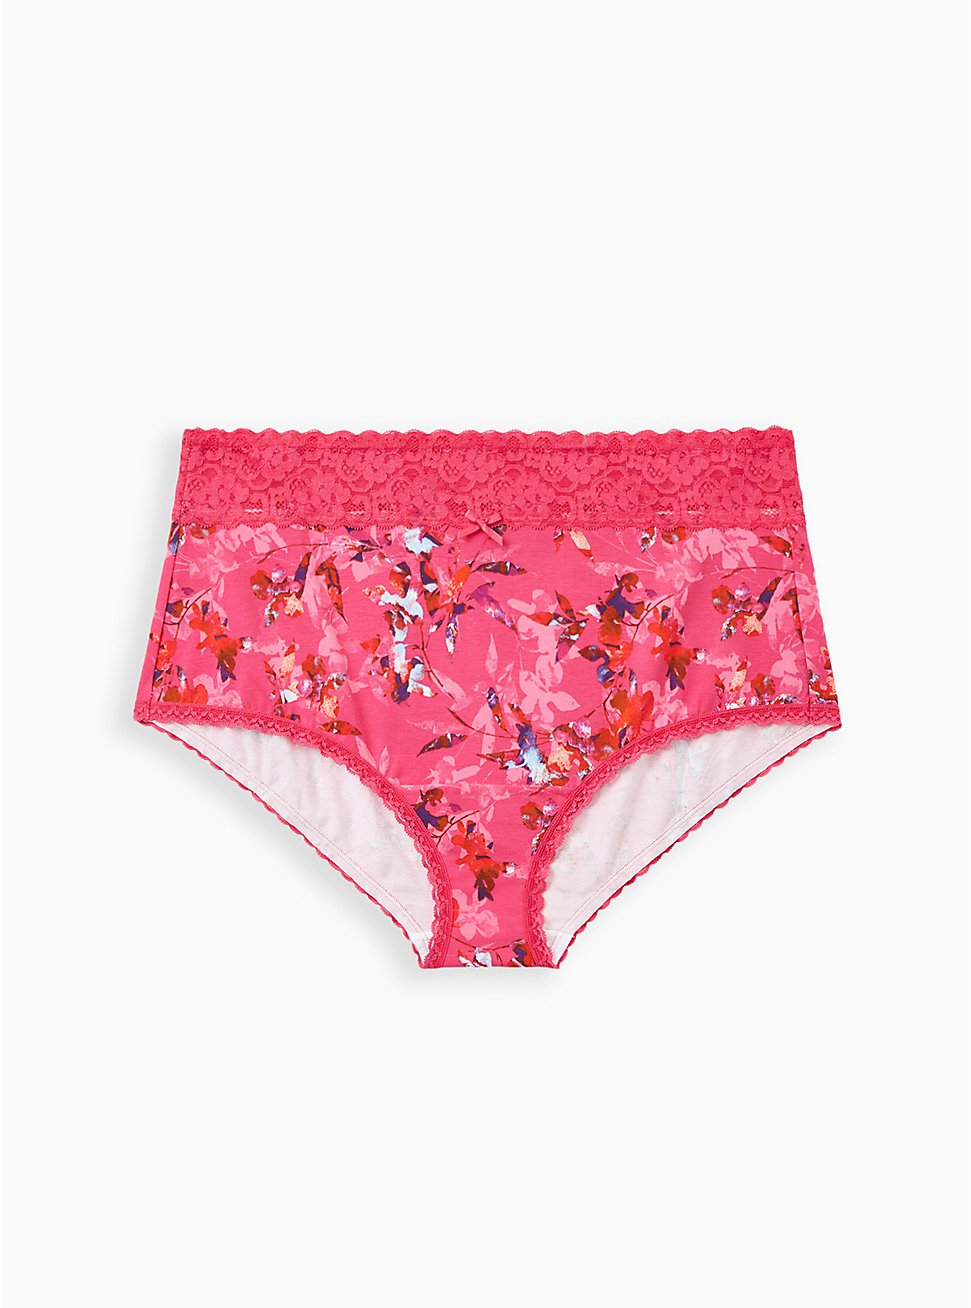 Pink Floral Wide Lace Cotton Brief Panty, Light Forest Floral- PINK, hi-res